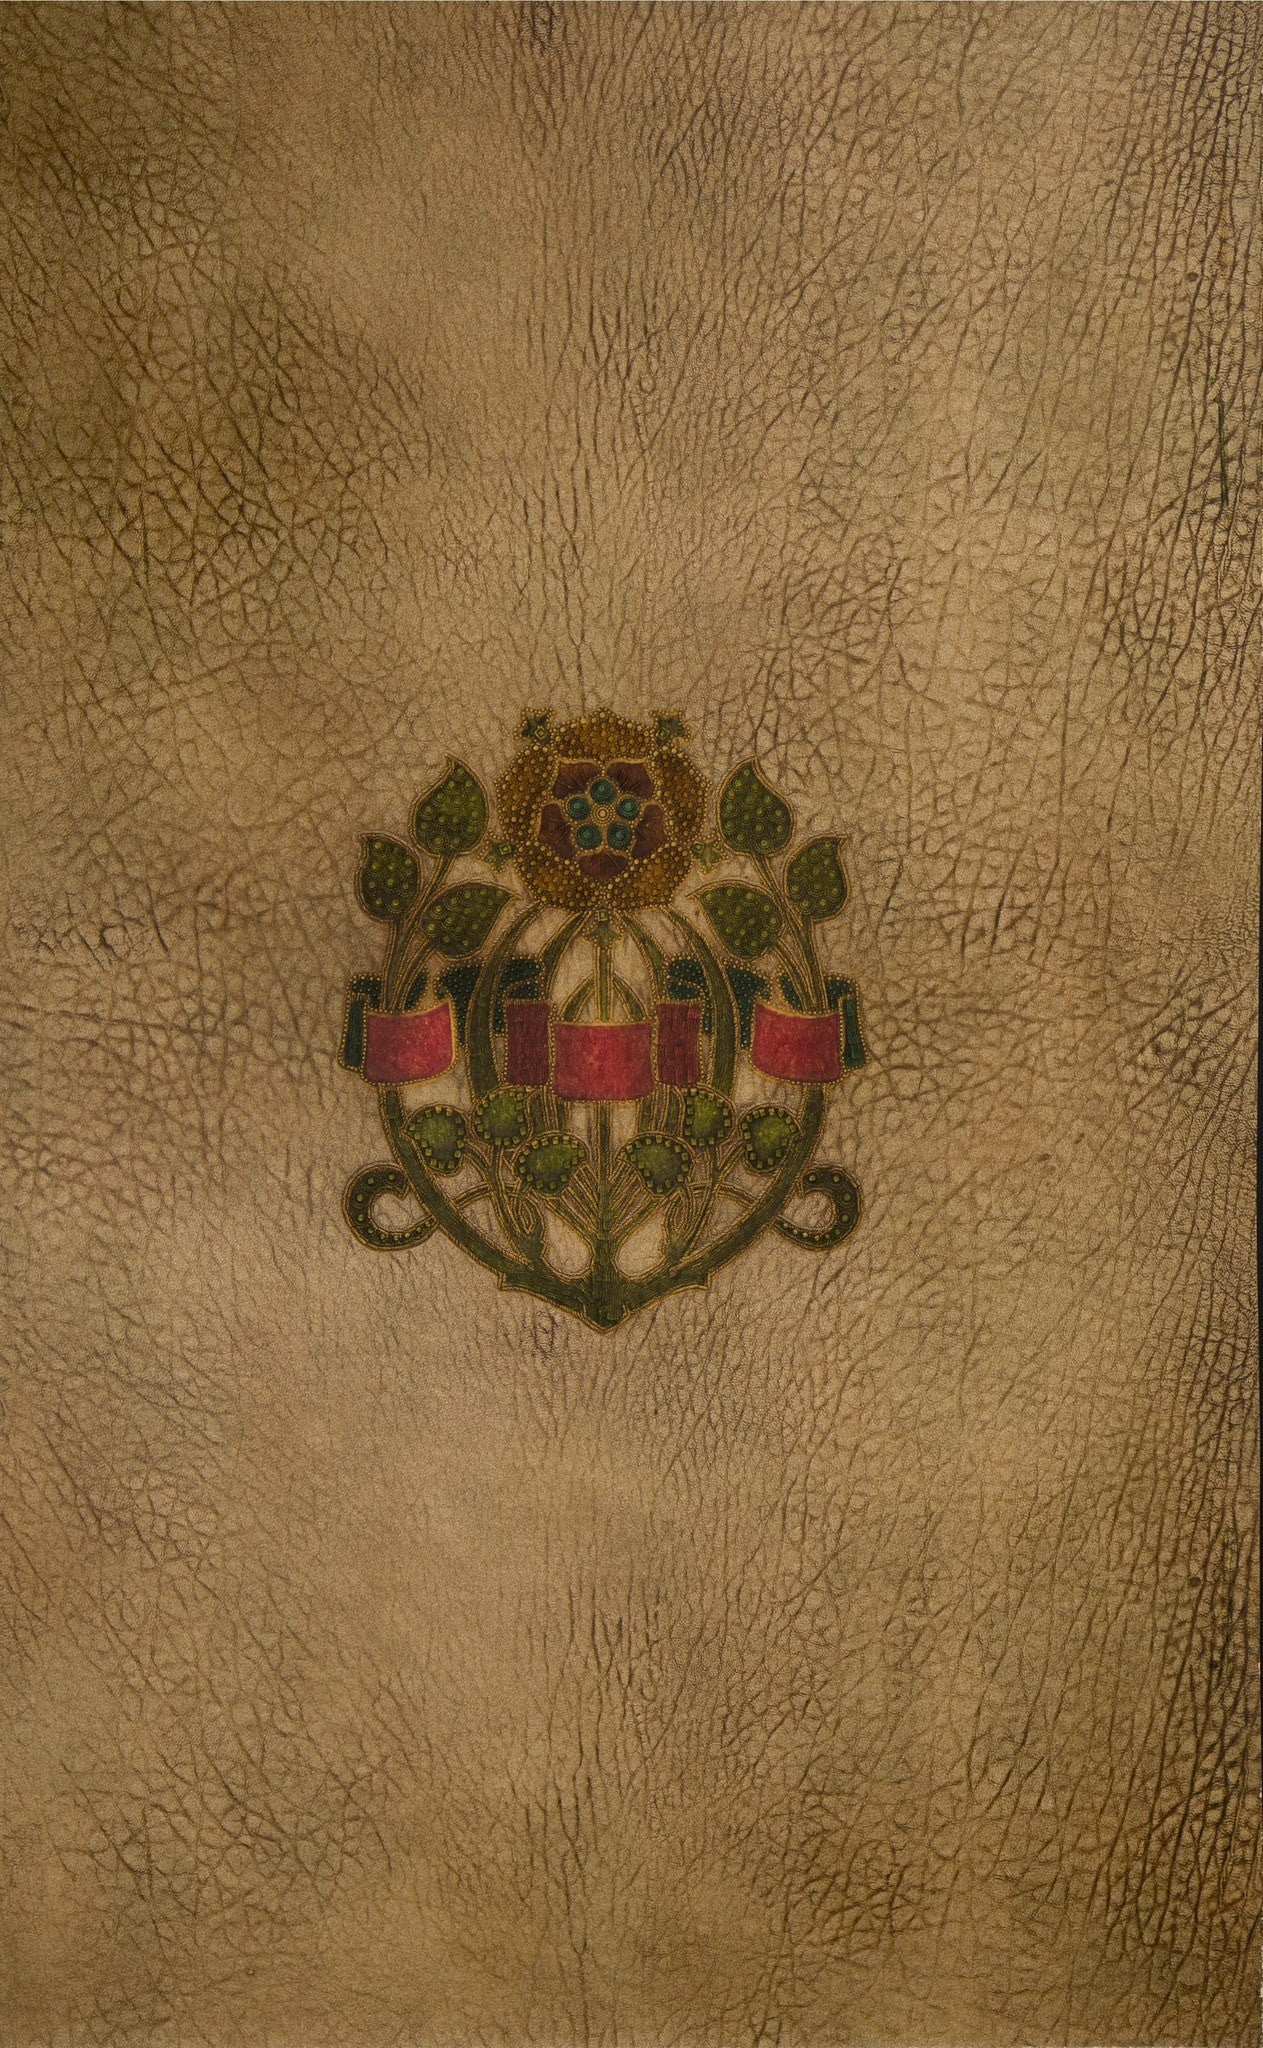 Embossed Arts & Crafts Rose on Leather - Antique Wallpaper Remnant